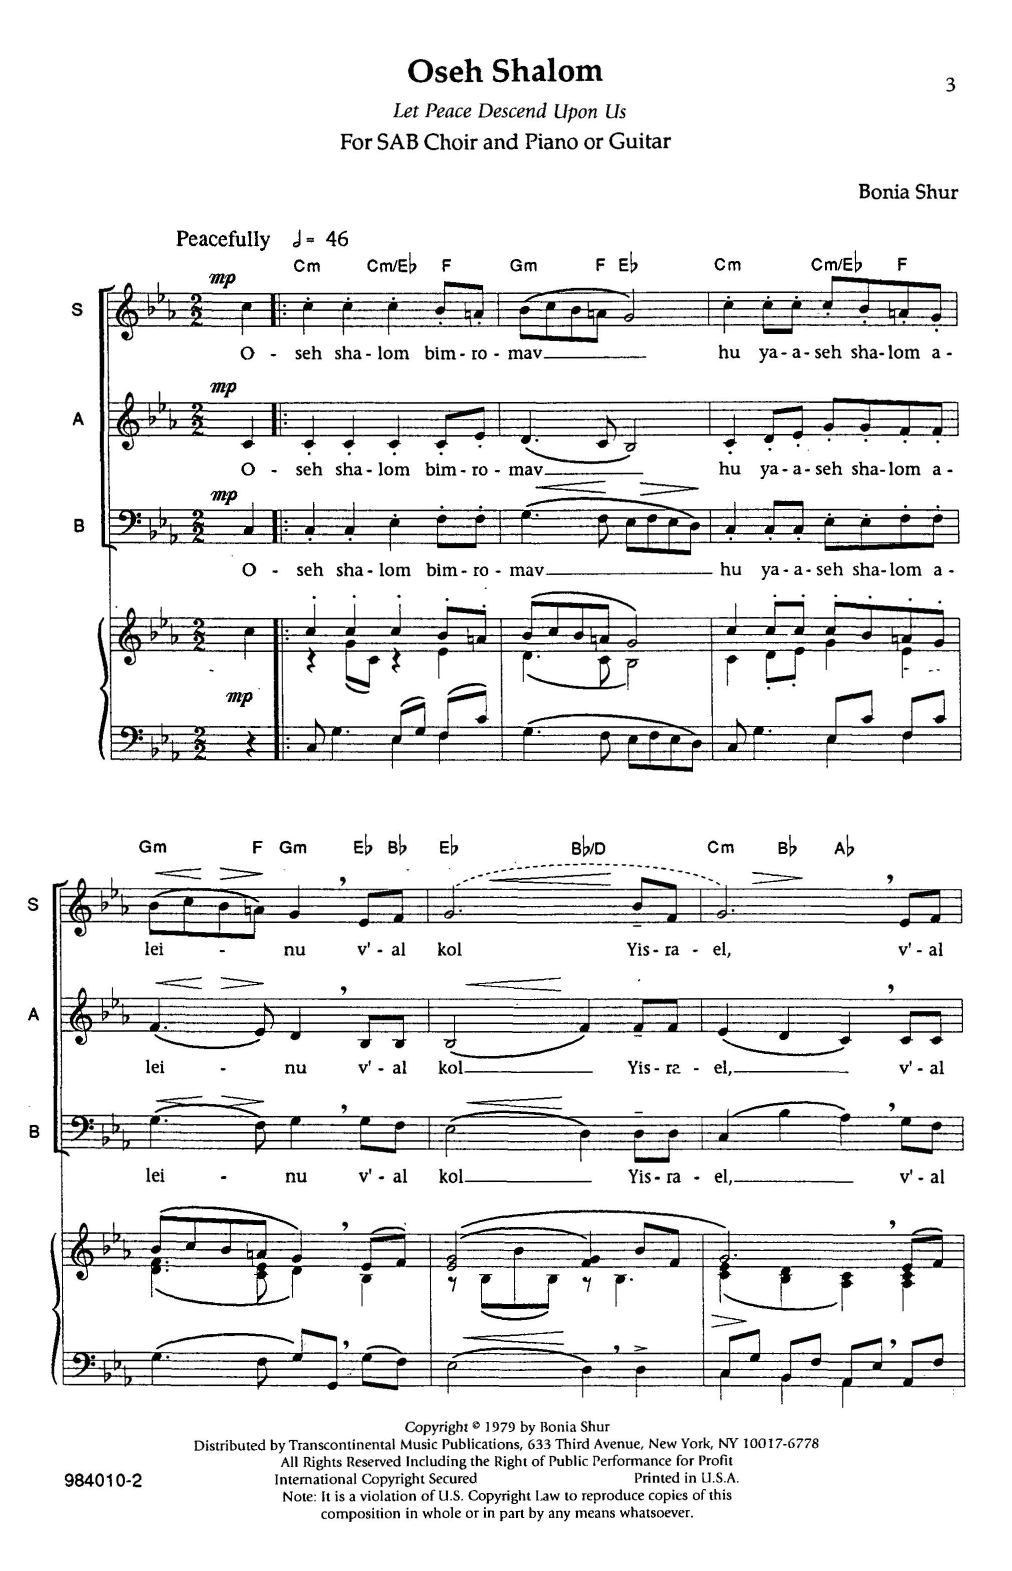 Bonia Shur Oseh Shalom Sheet Music Notes & Chords for Choral - Download or Print PDF